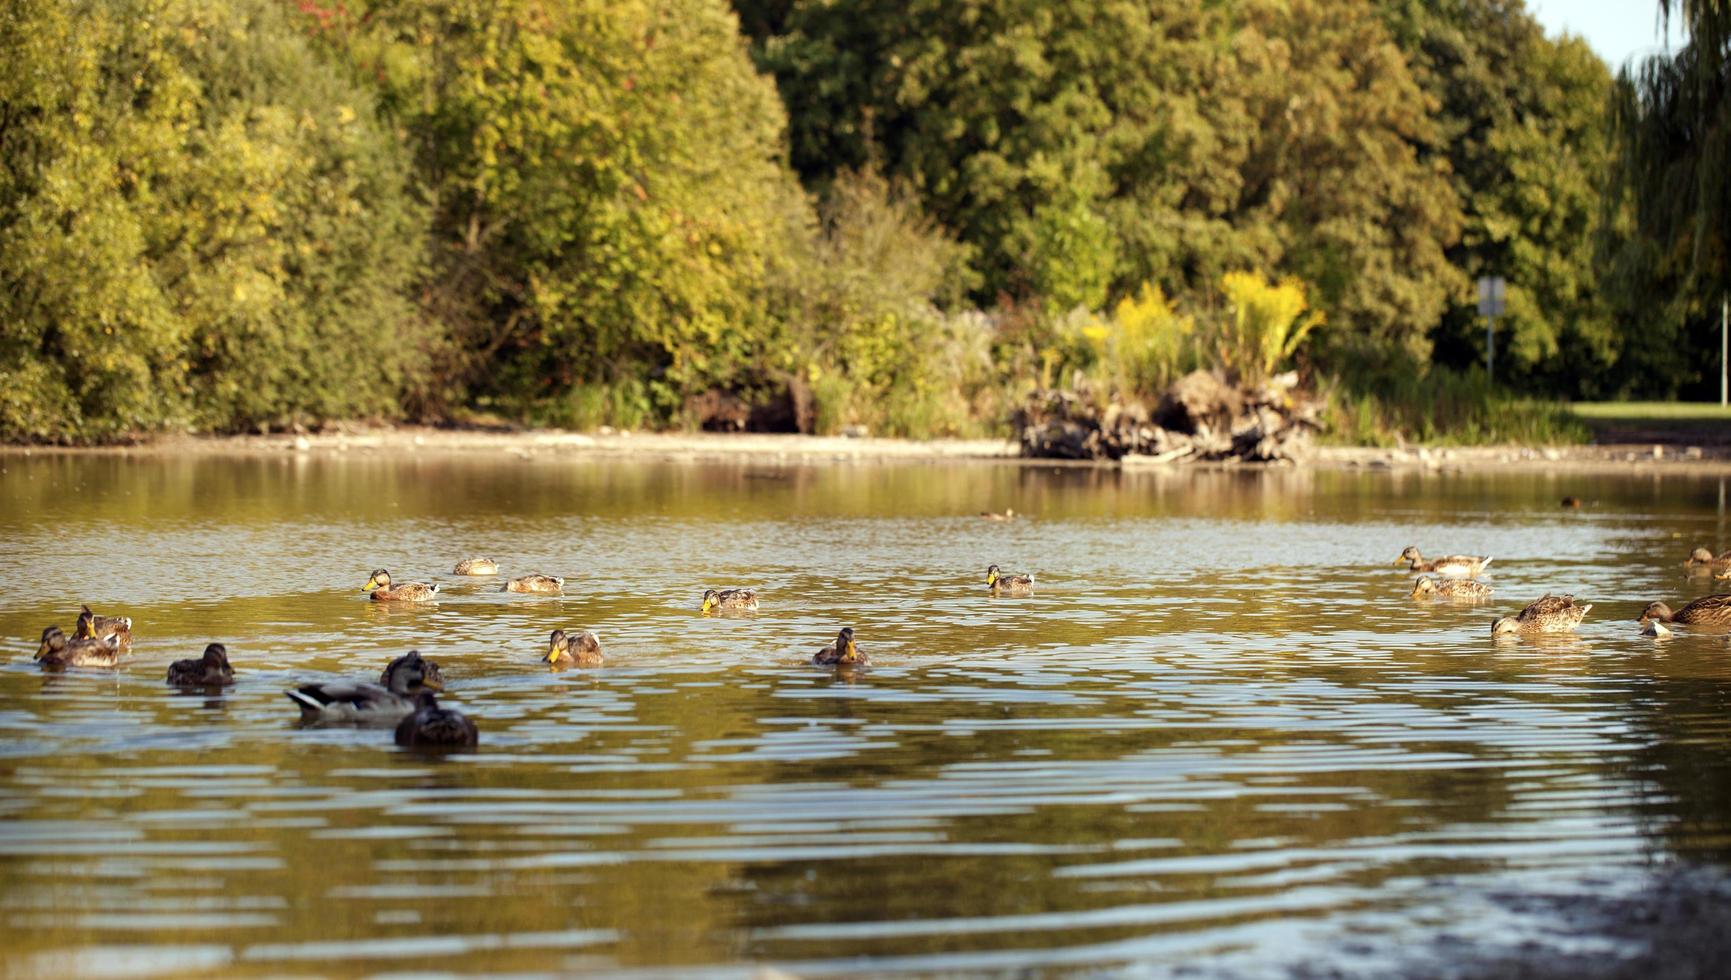 doce animal pássaro pato no lago na natureza foto